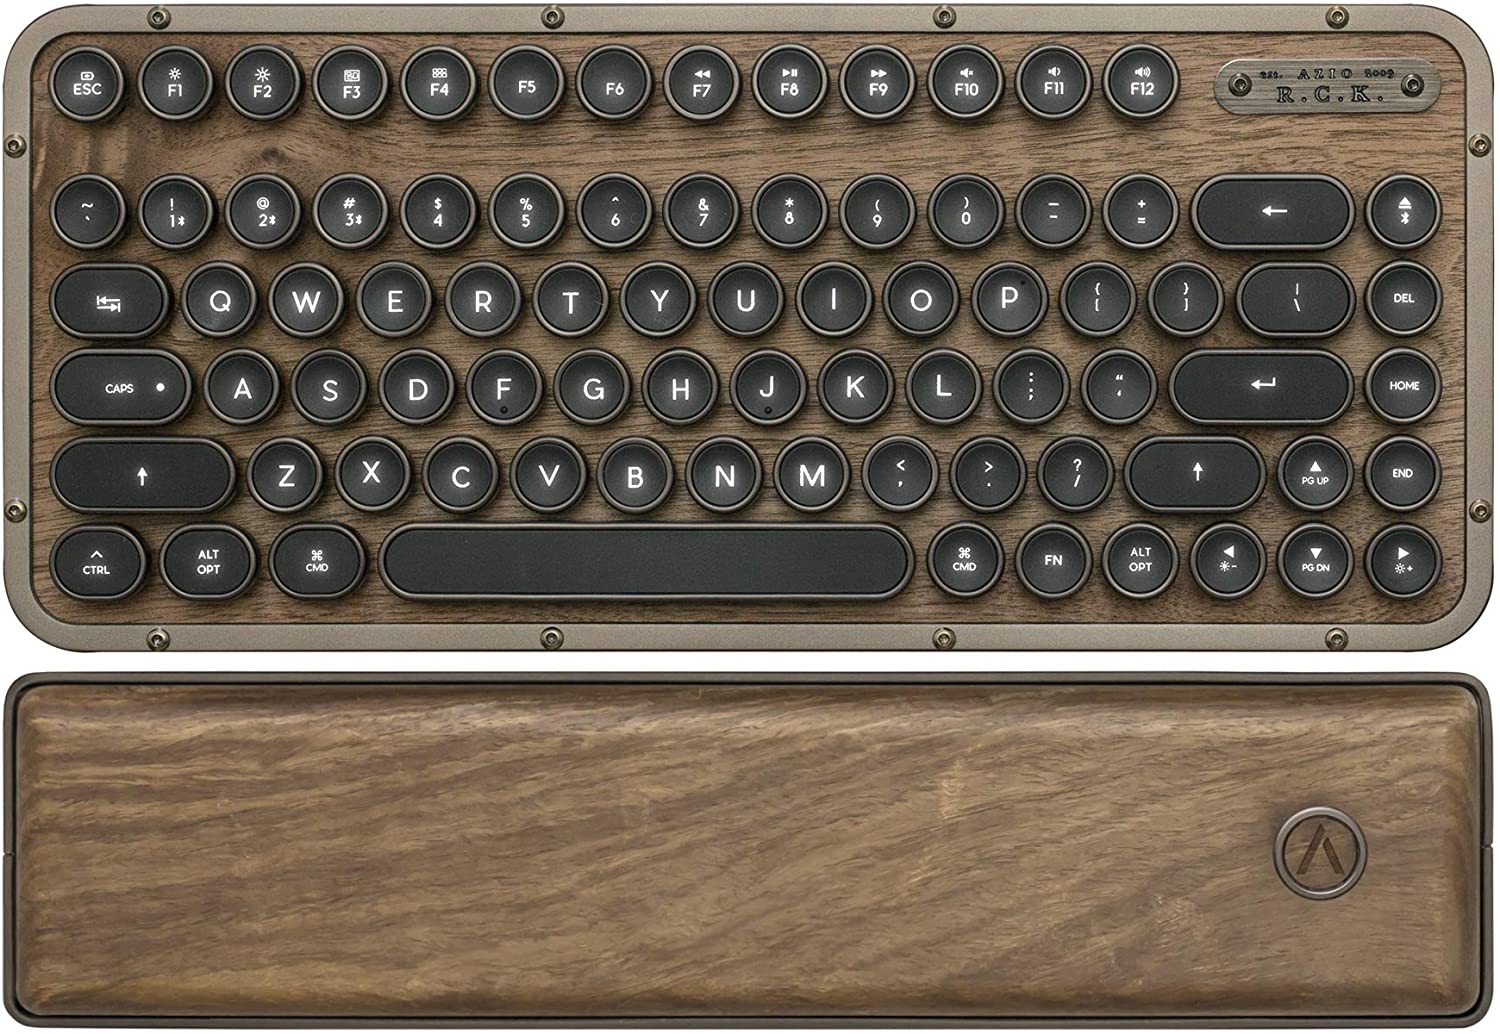 AZIO Retro Compact Keyboard